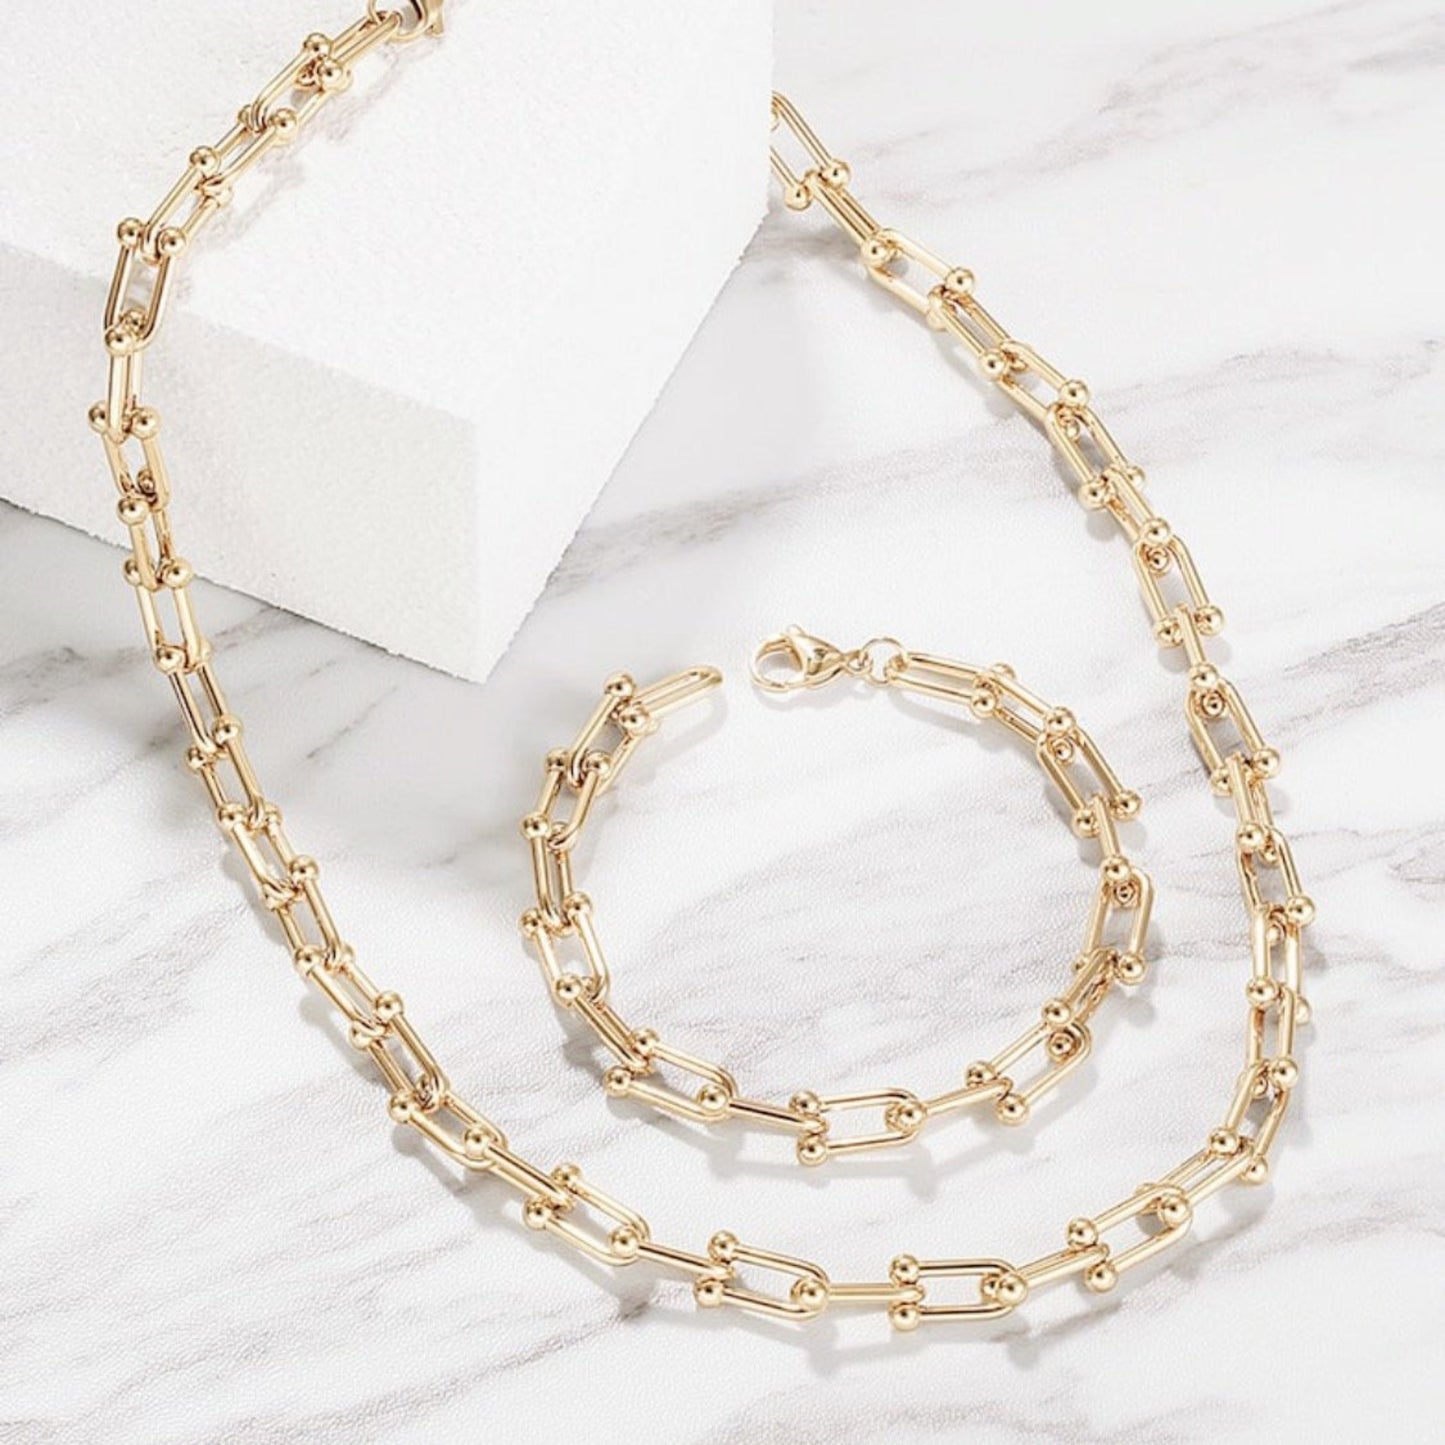 U link bracelet & necklace, gold-plated over stainless steel, isvi boutique